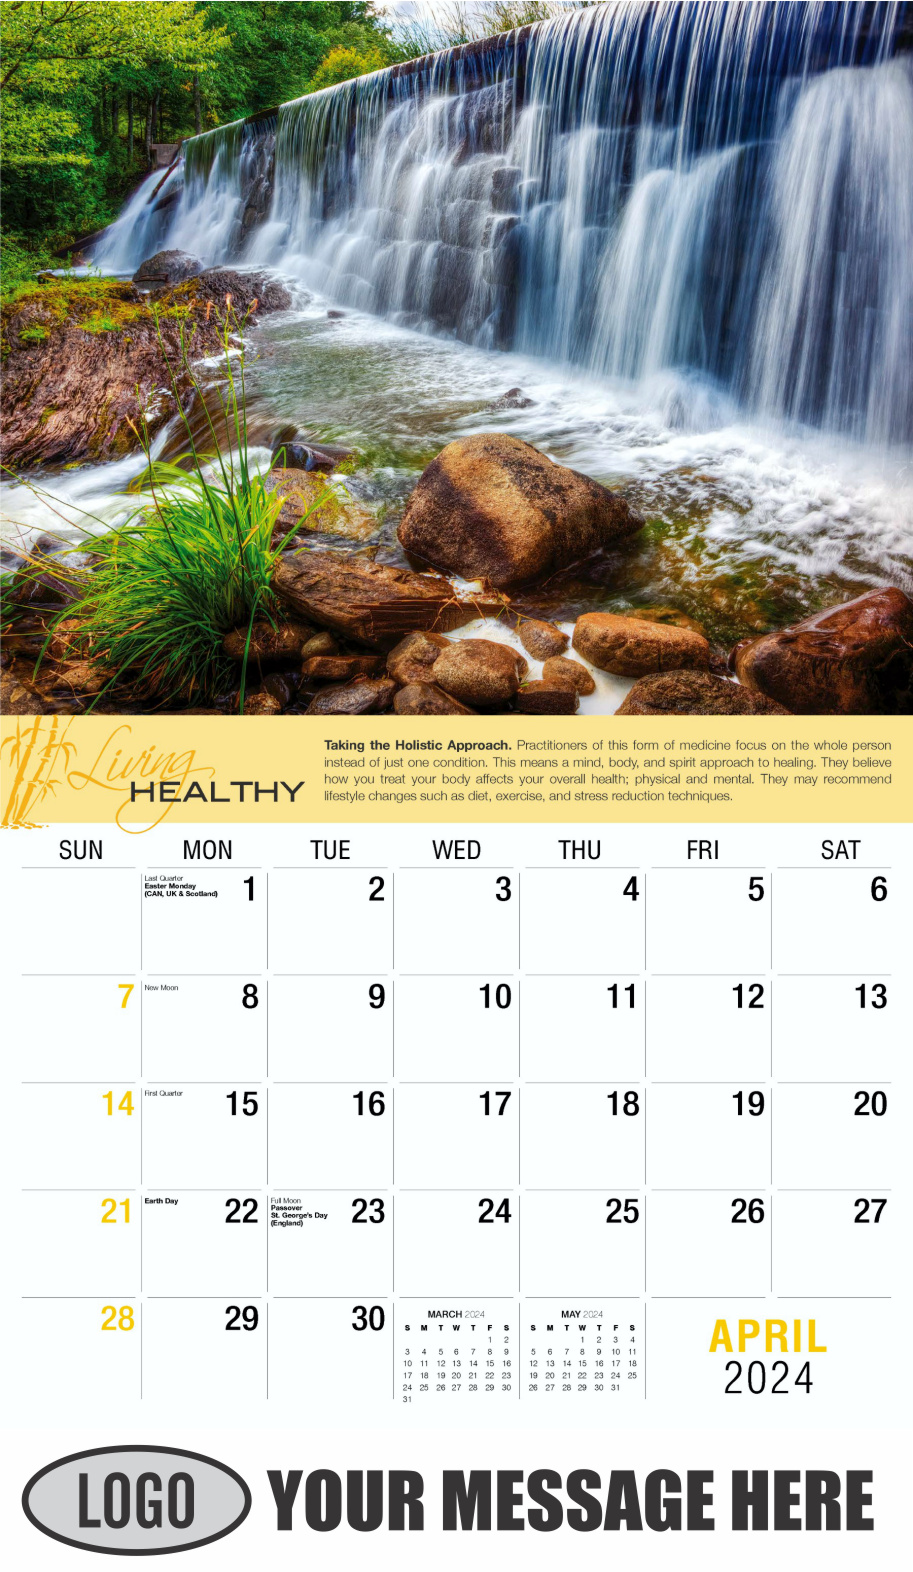 Living Healthy 2024 Business Promotional Calendar - April